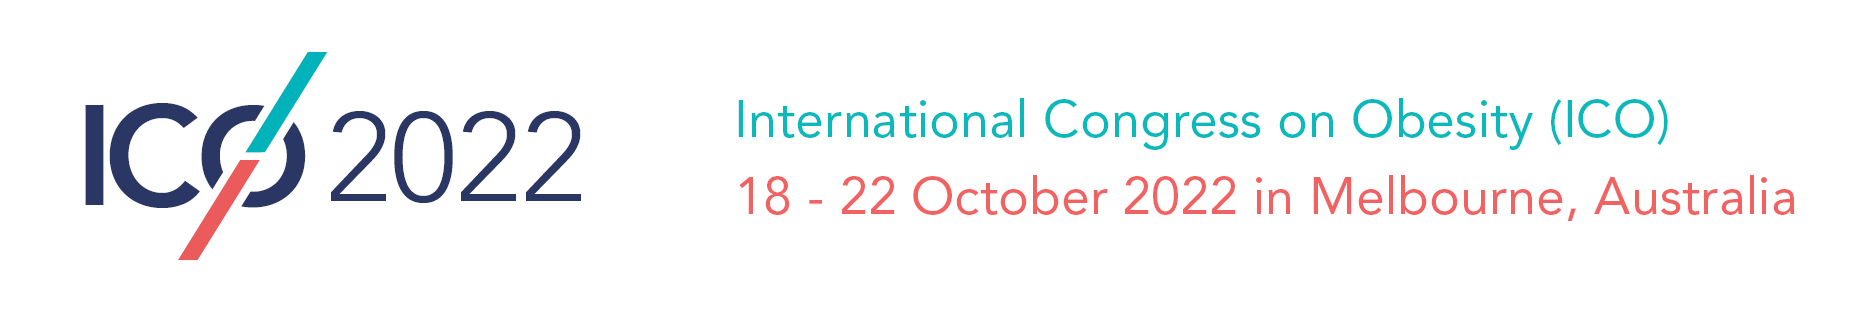 International Congress on Obesity